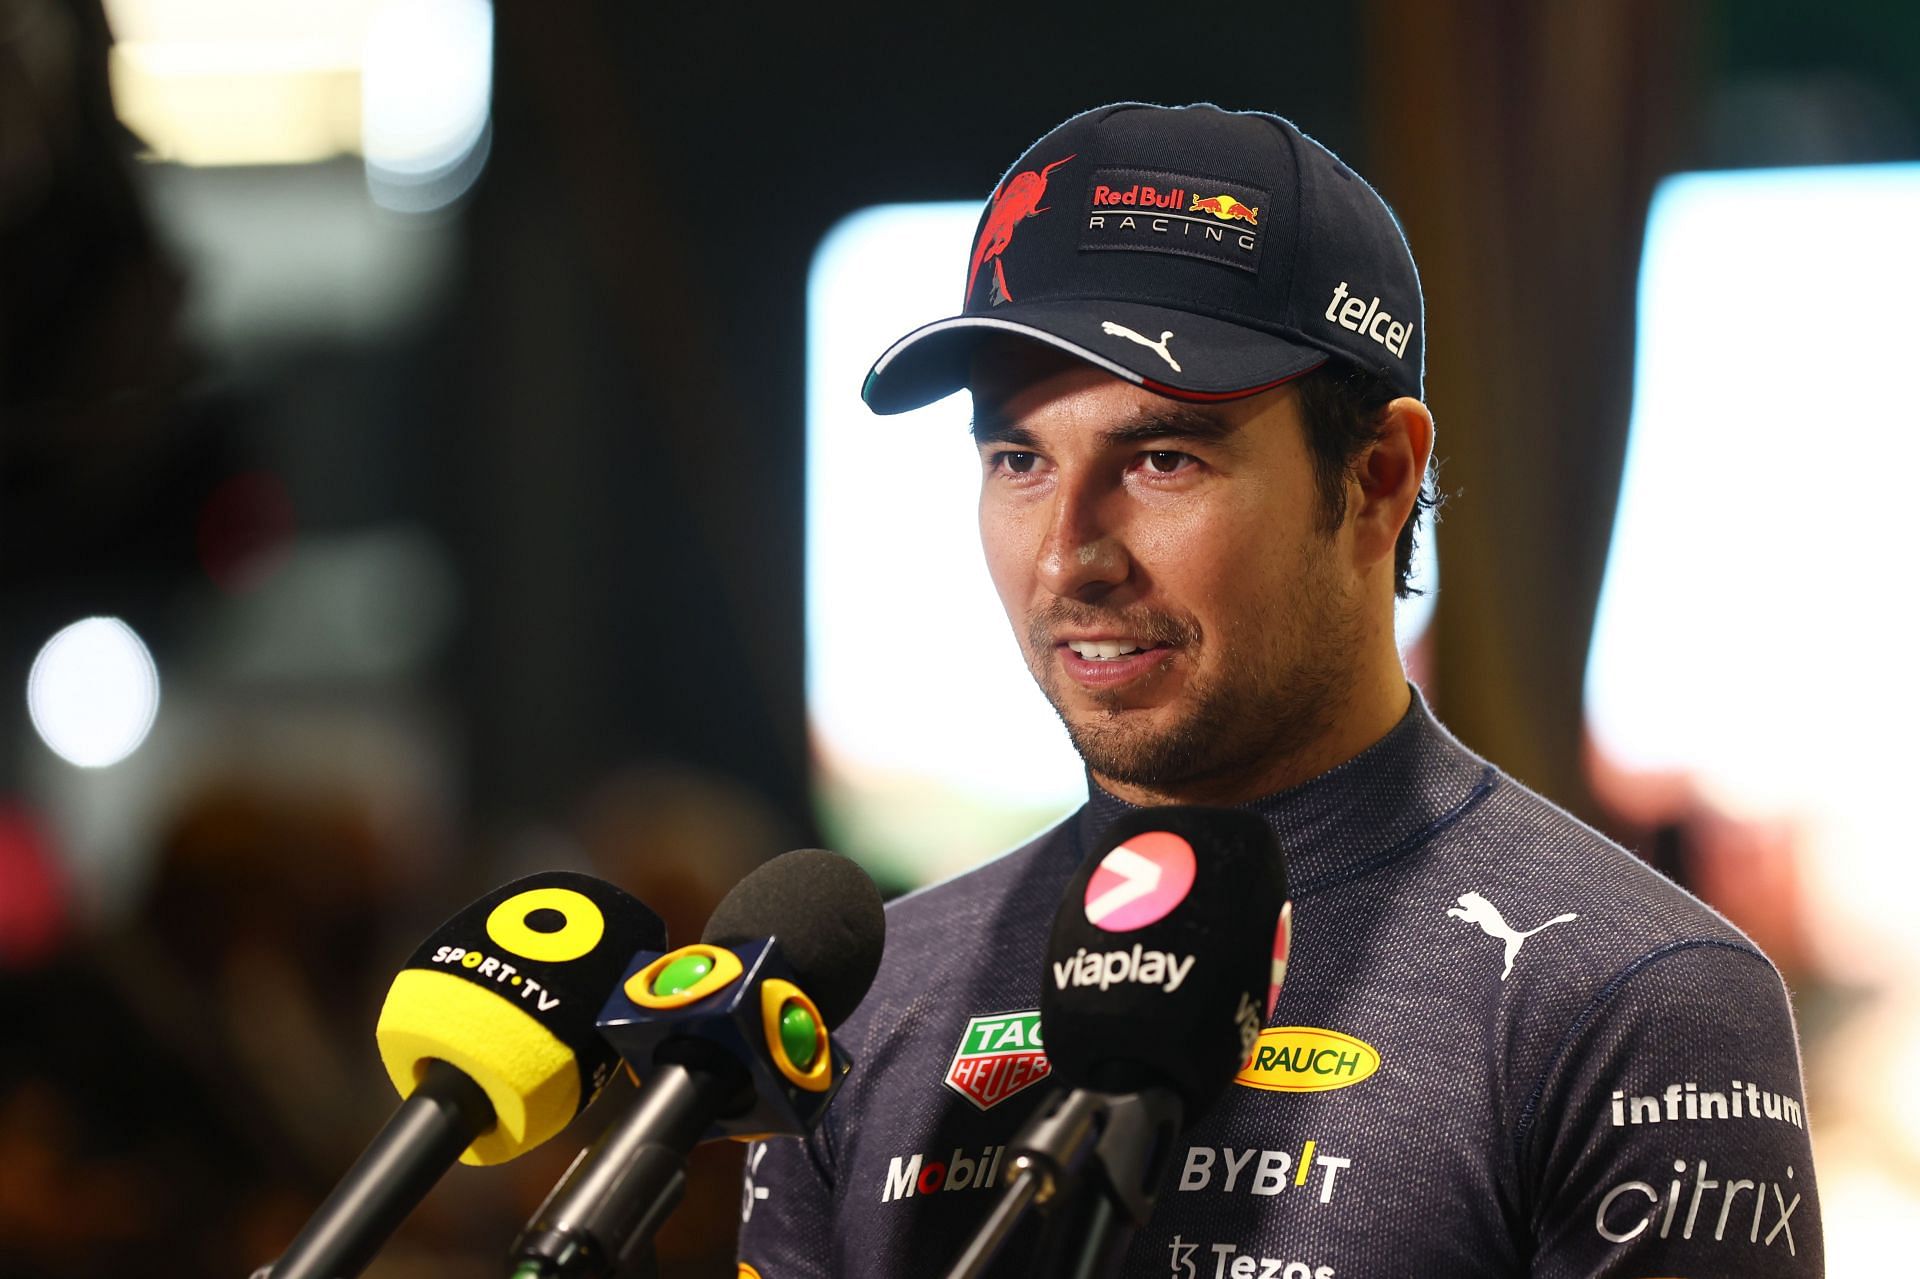 Sergio Perez clinched pole position for the Saudi Arabian GP